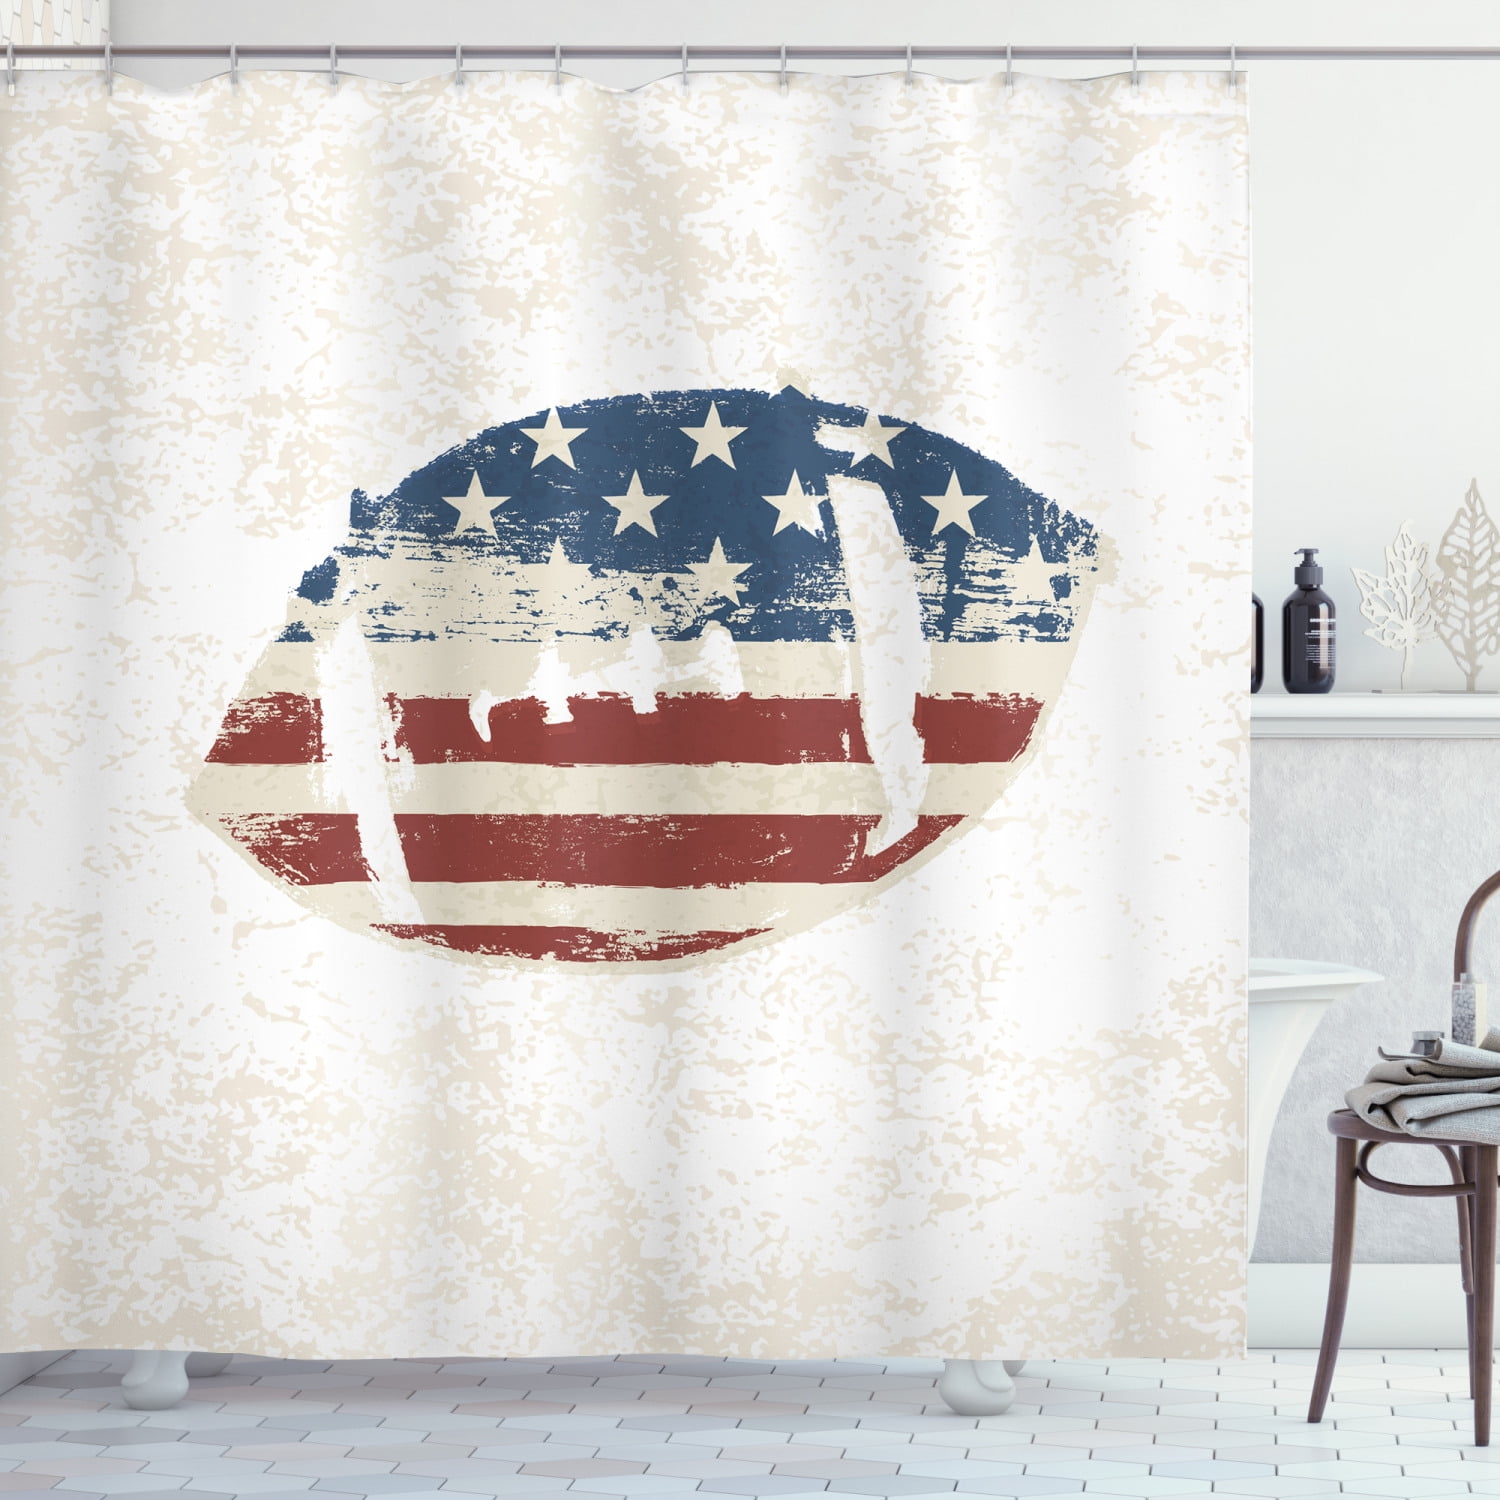 Waterproof Fabric Bathroom Liner American Eagle Flag Shower Curtain Set Mat Hook 